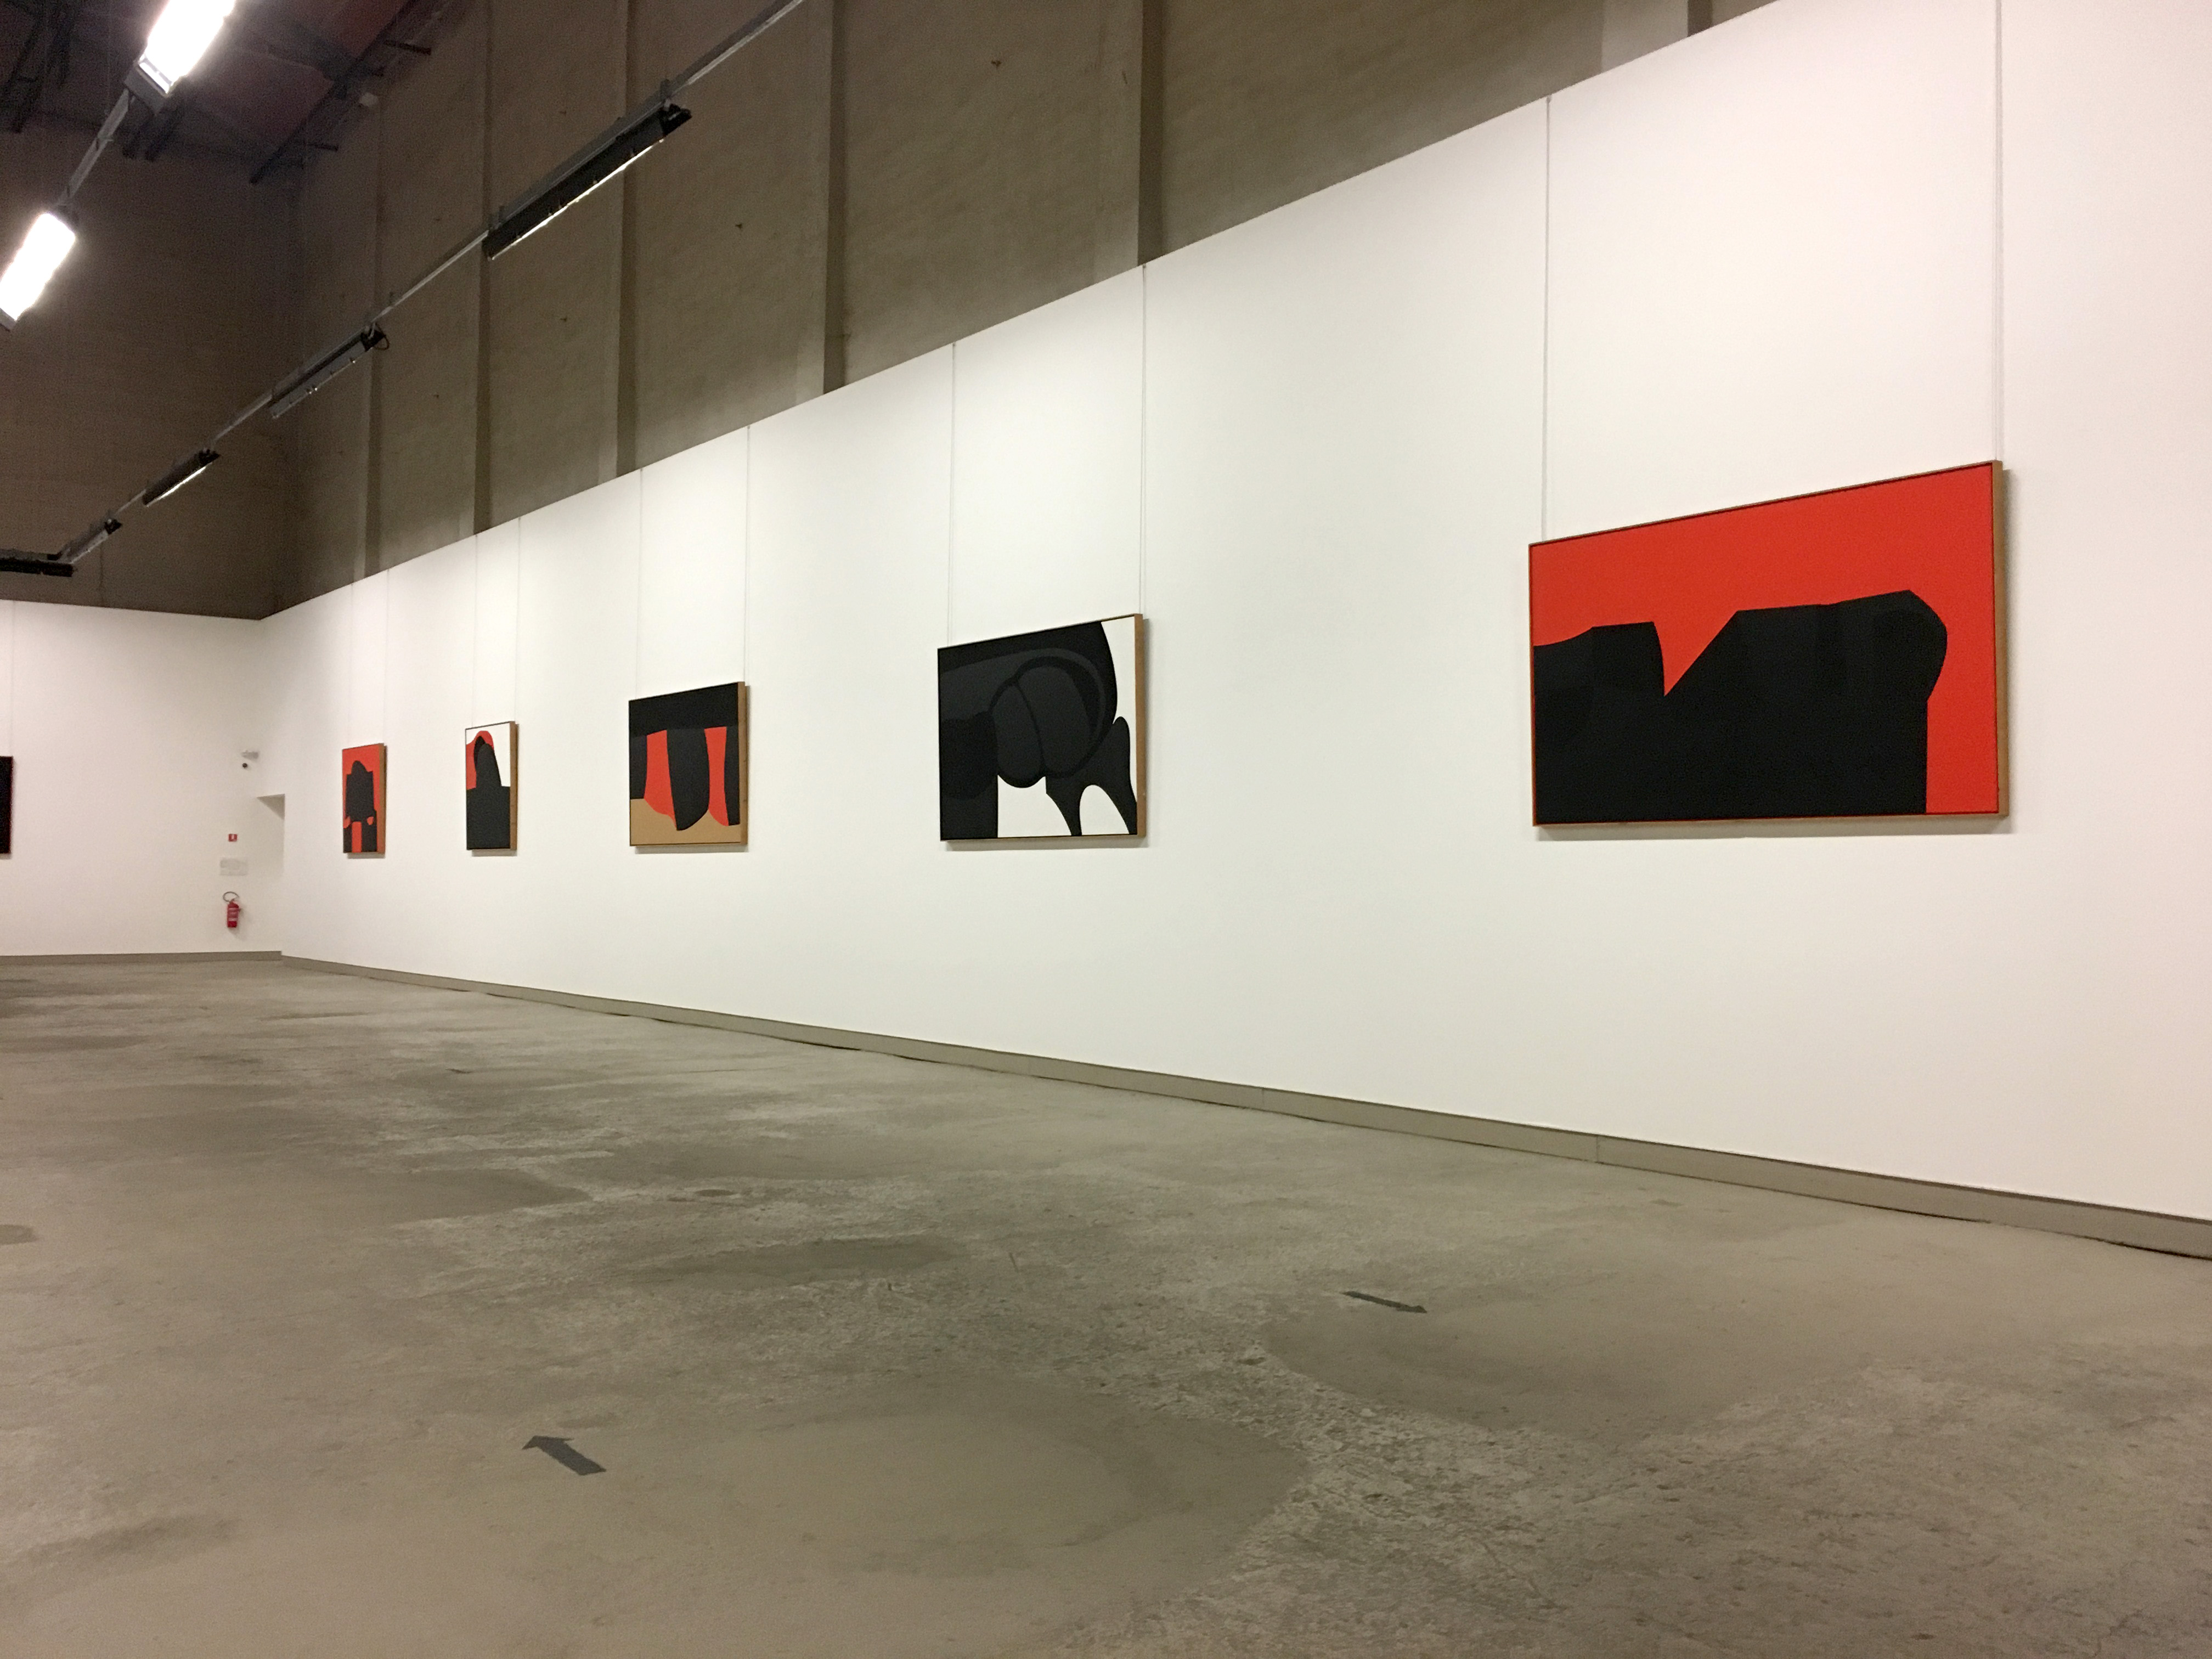 Black and red pieces Alberto Burri Collection Umbria